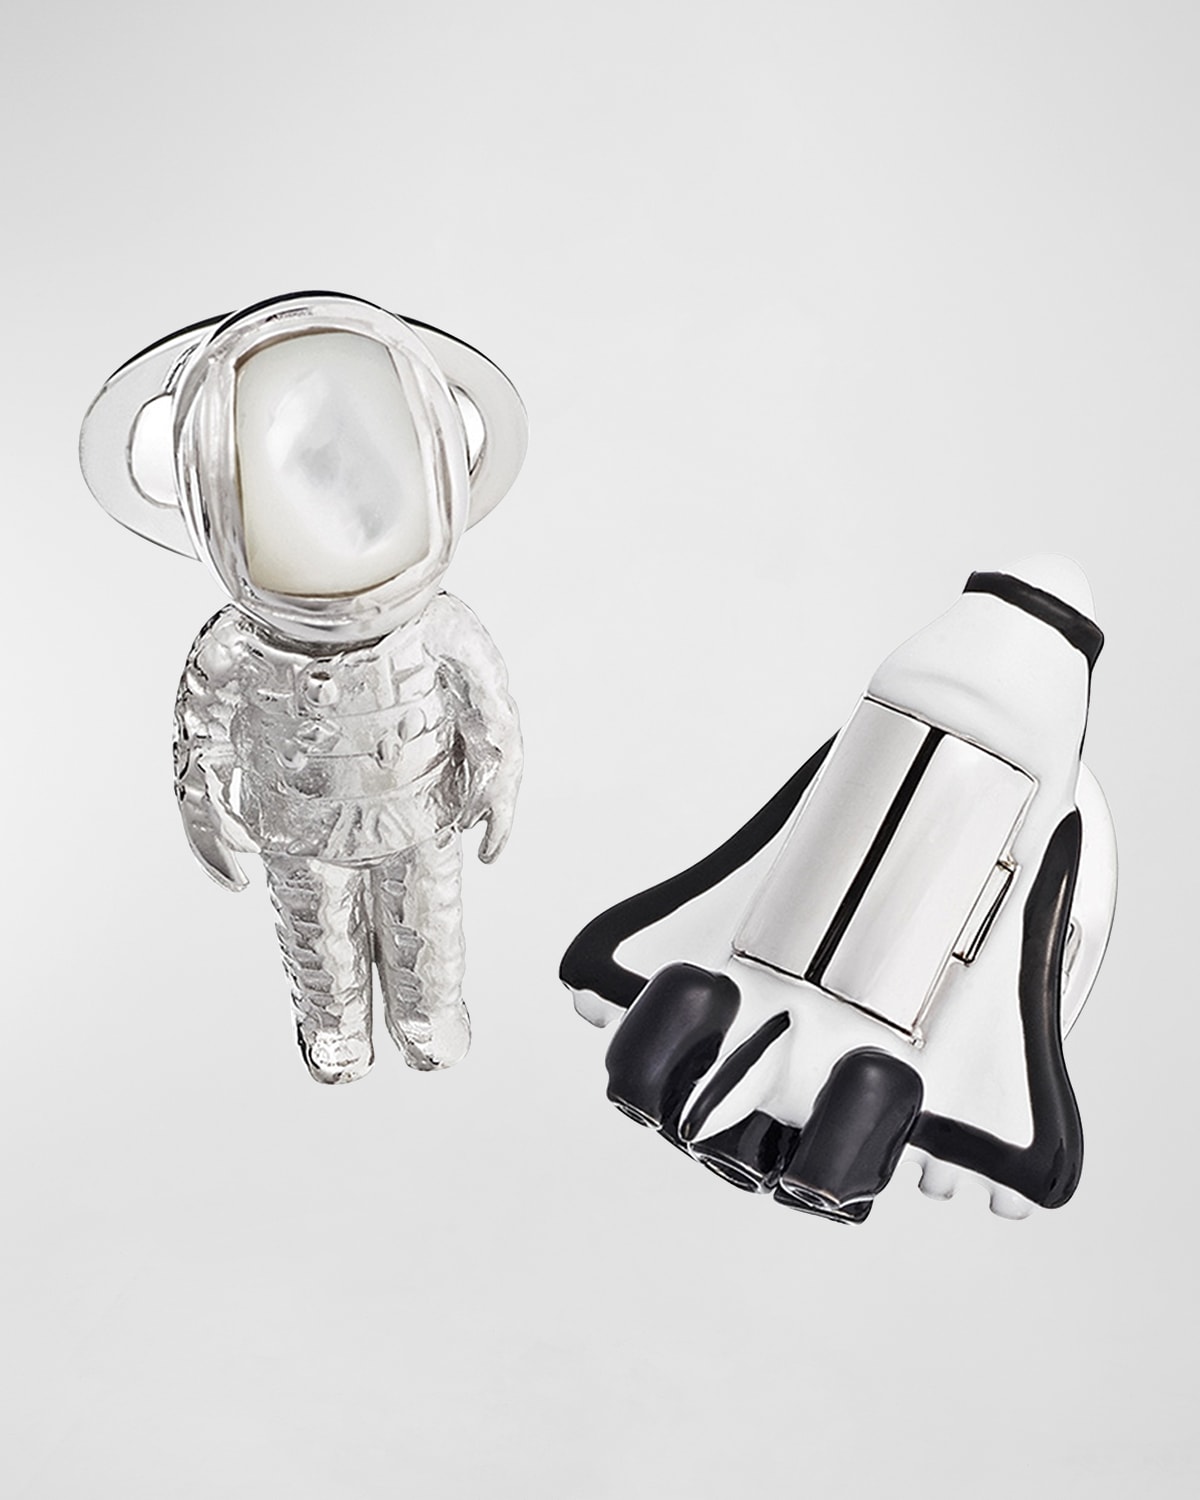 Men's Shuttle & Astronaut Sterling Silver/Gemstone Cufflinks